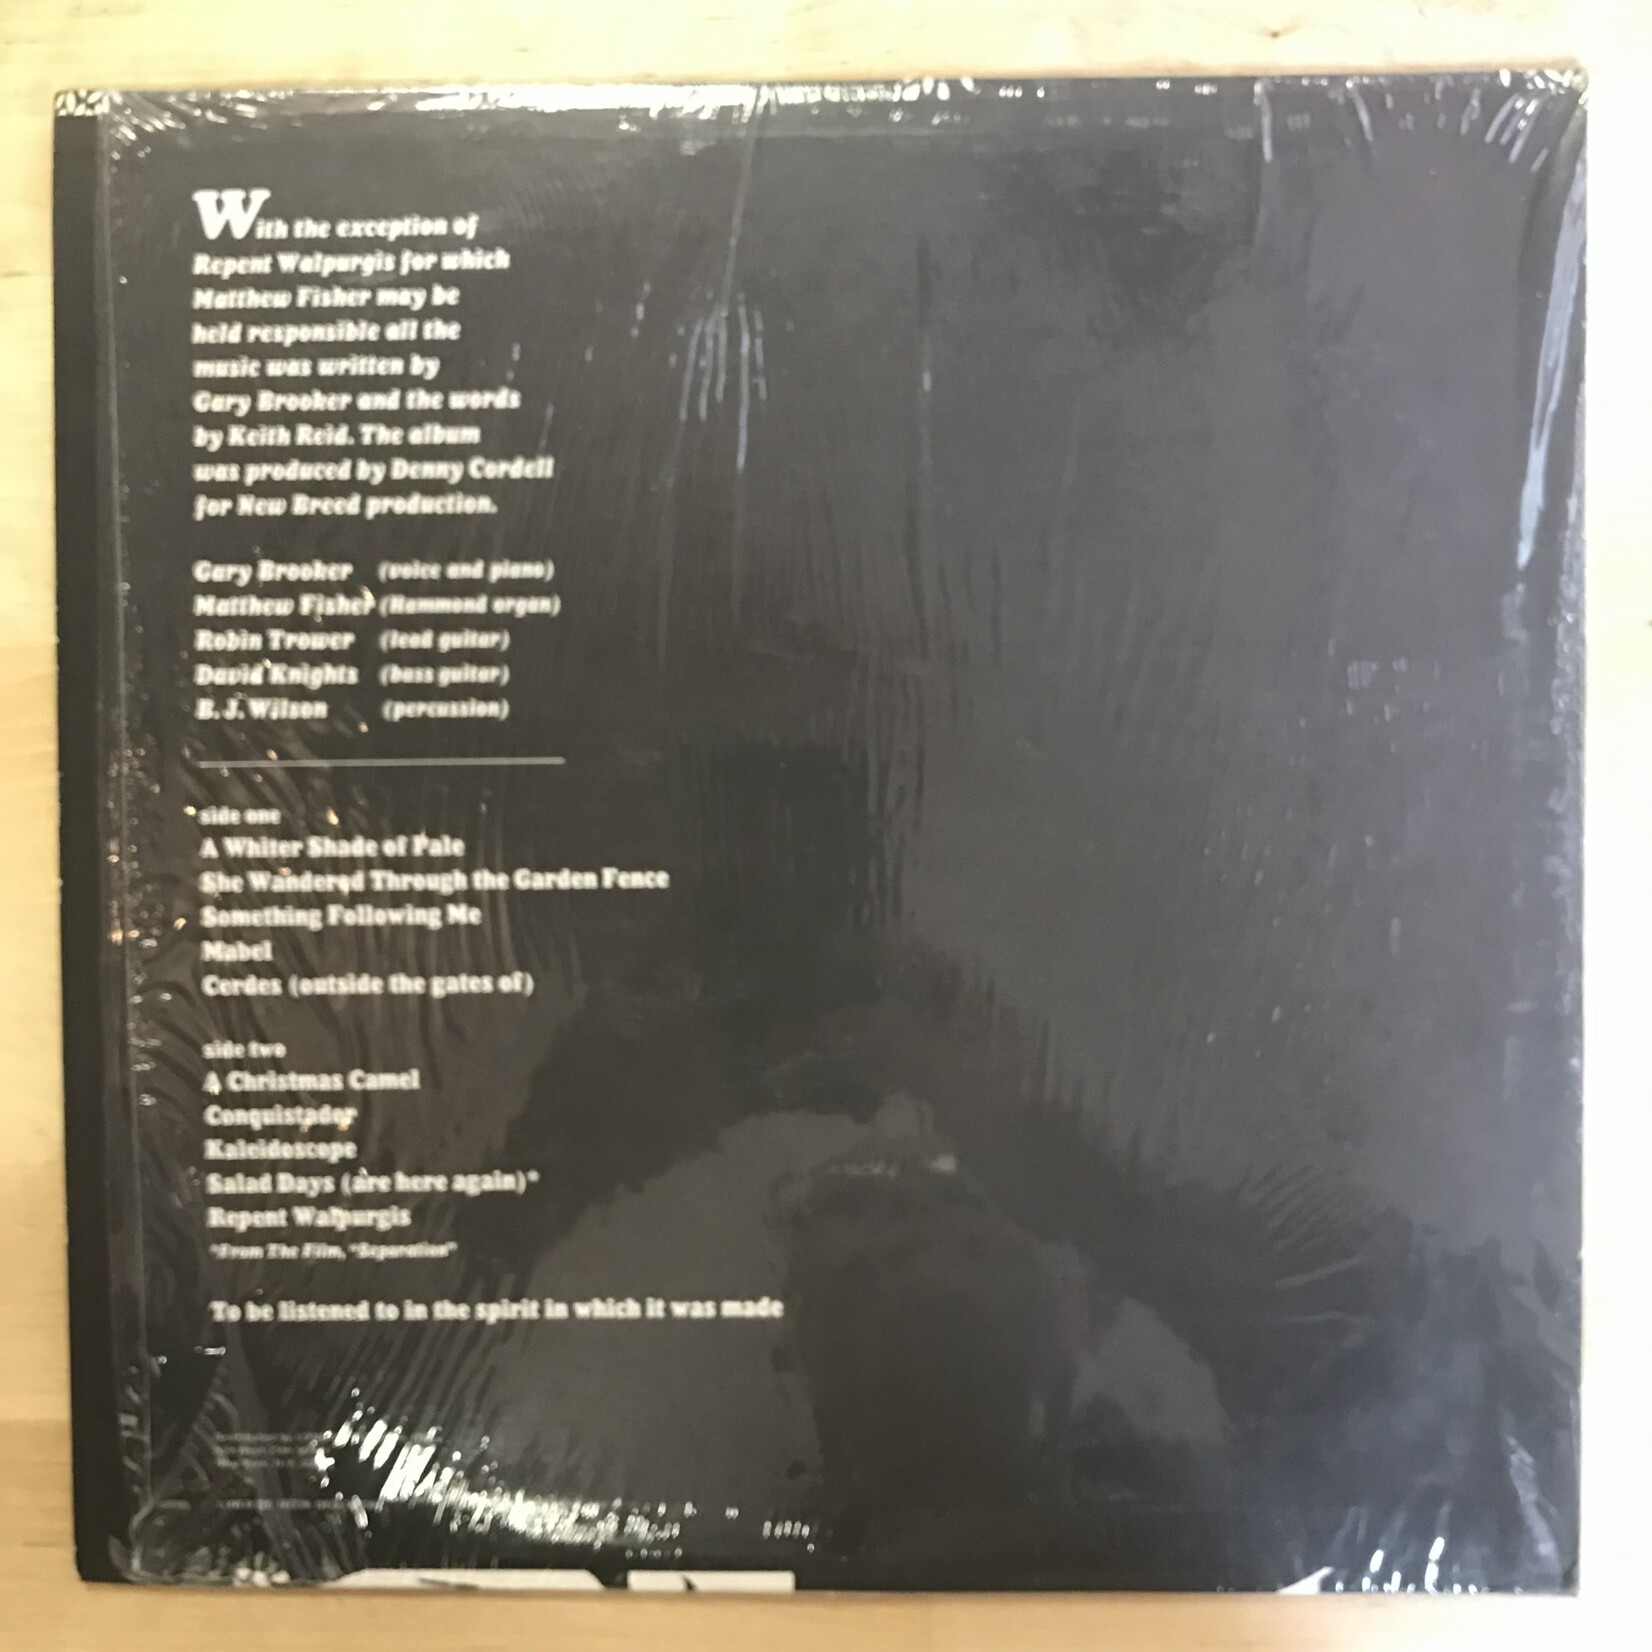 Procol Harum - Procol Harum - DES18008 - Vinyl LP w/ Poster (USED)